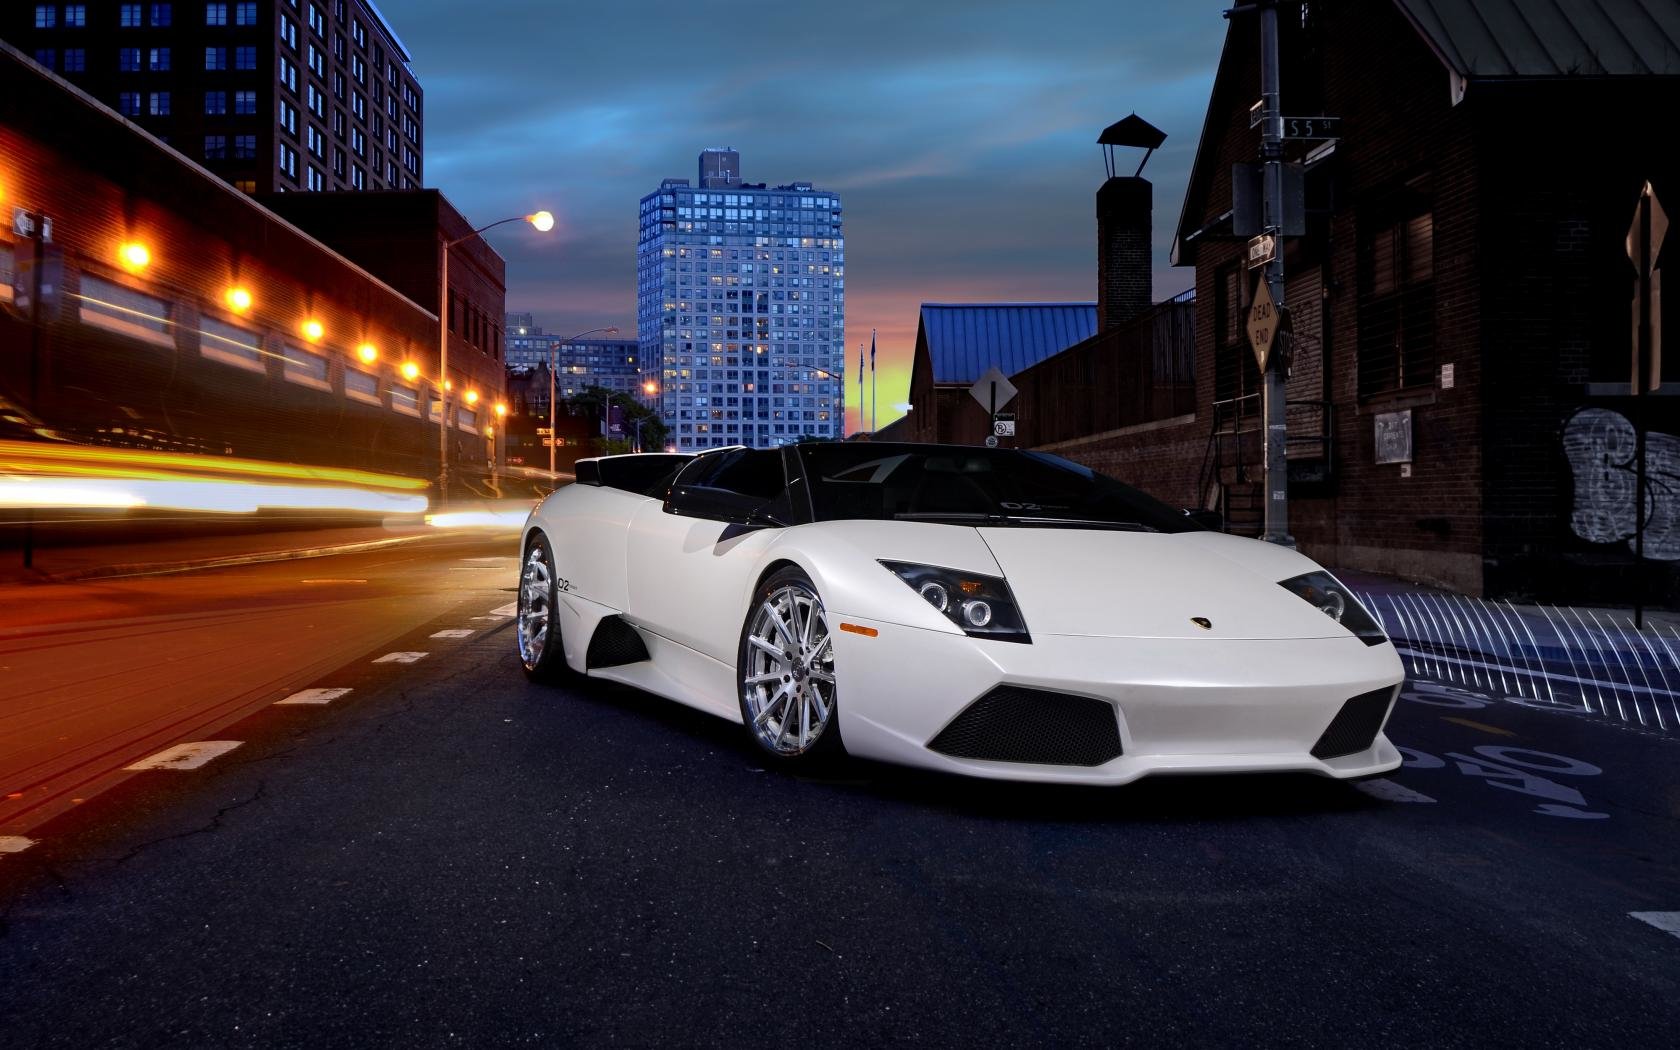 Best Lamborghini Murcielago background ID:155275 for High Resolution hd 1680x1050 desktop